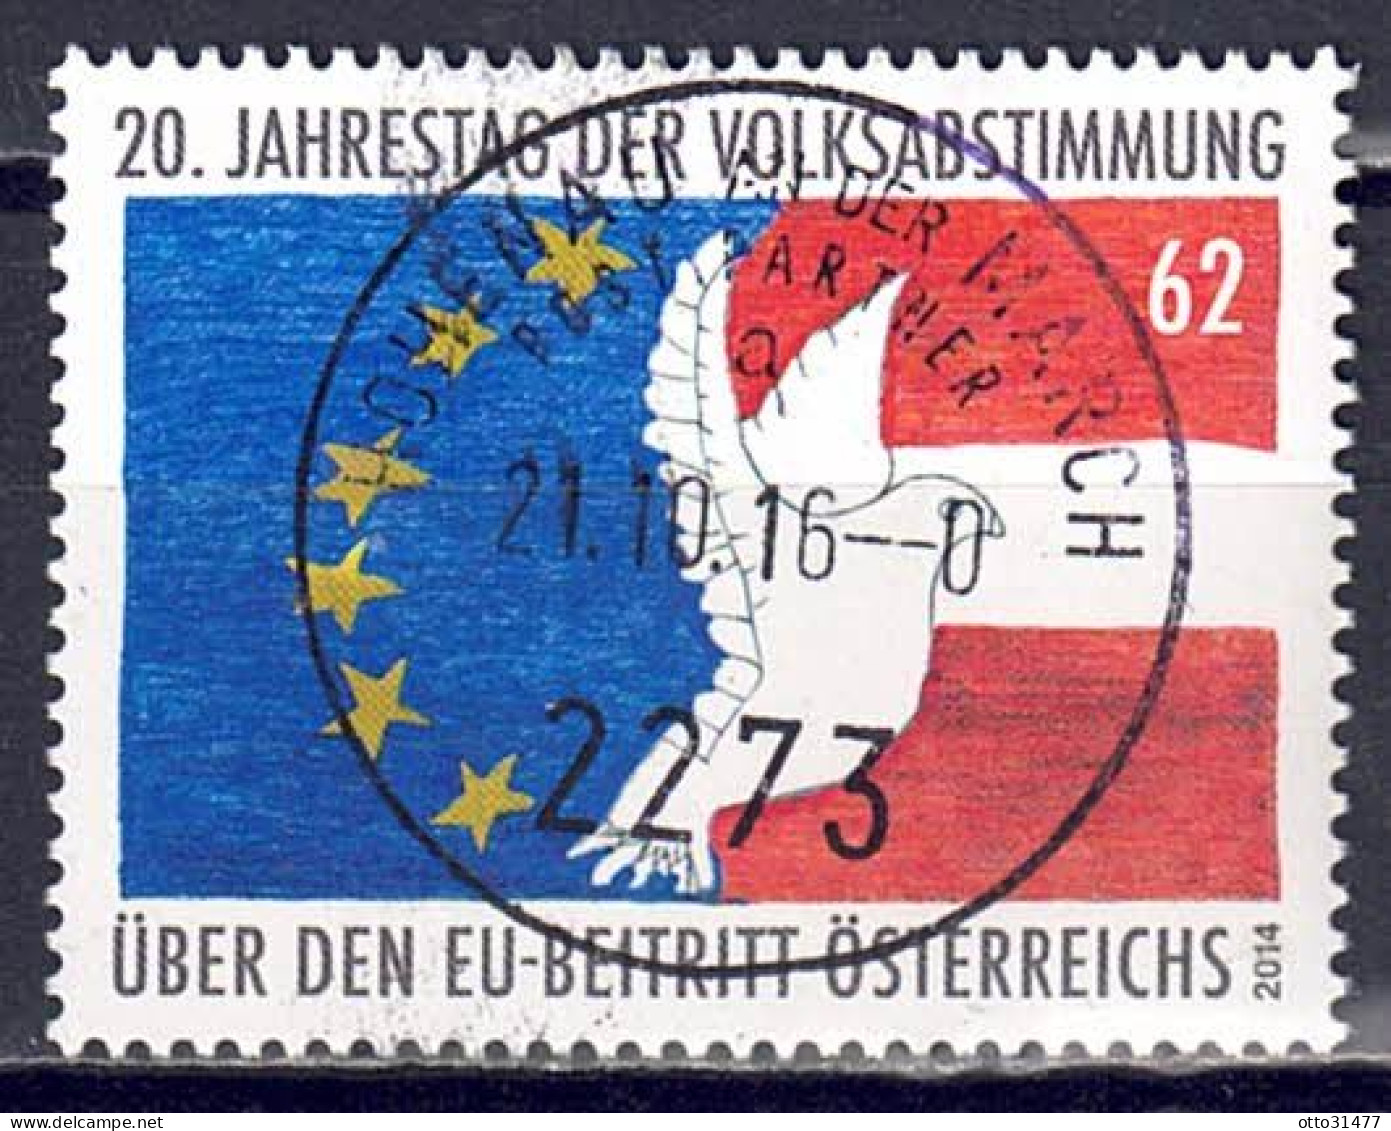 Österreich 2014 - EU-Beitritt, MiNr. 3145, Gestempelt / Used - Usati